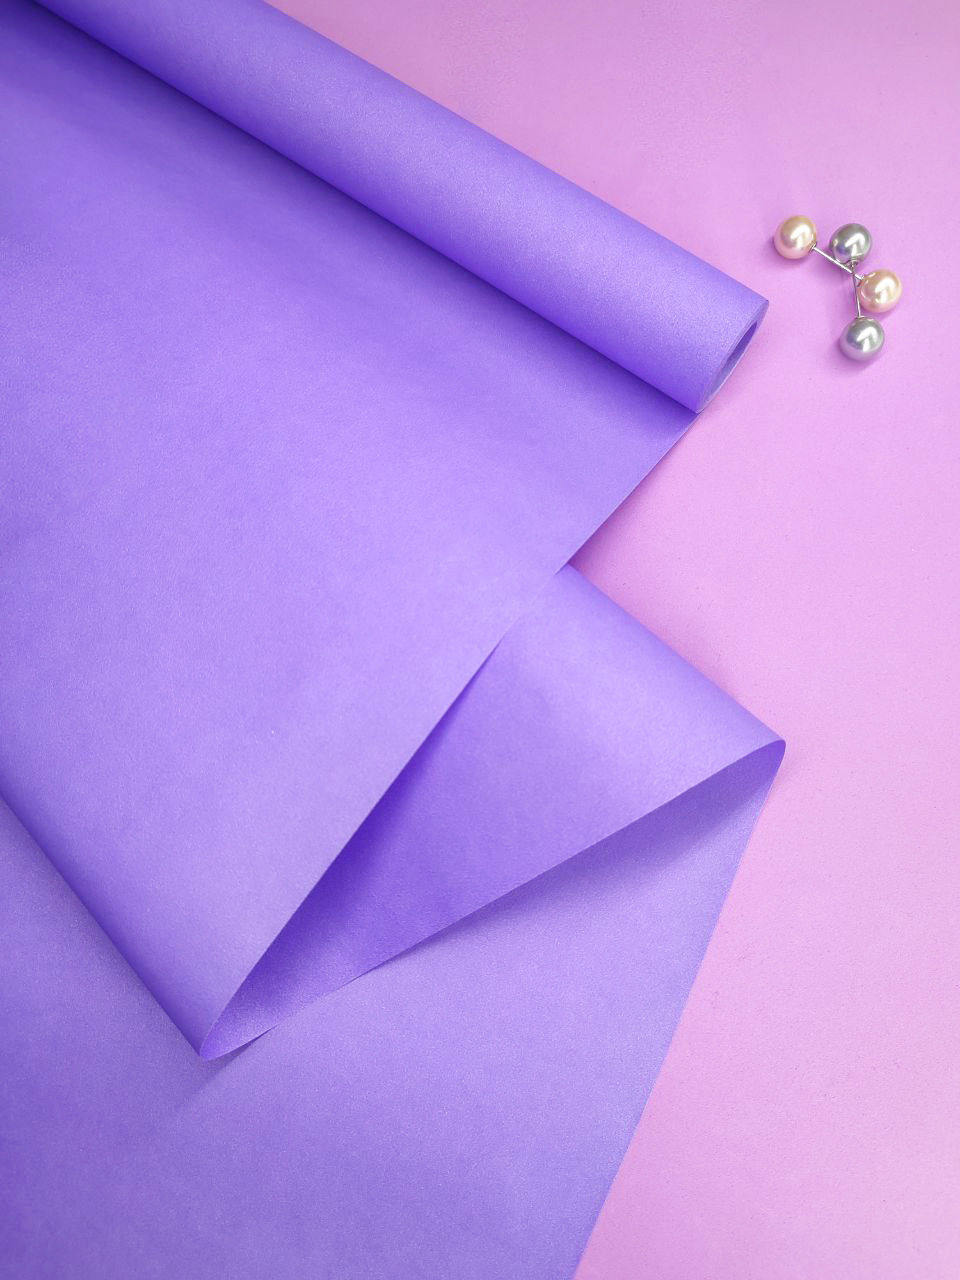 Бумага крафт 2х сторонняя 700мм ярко фиолетовый